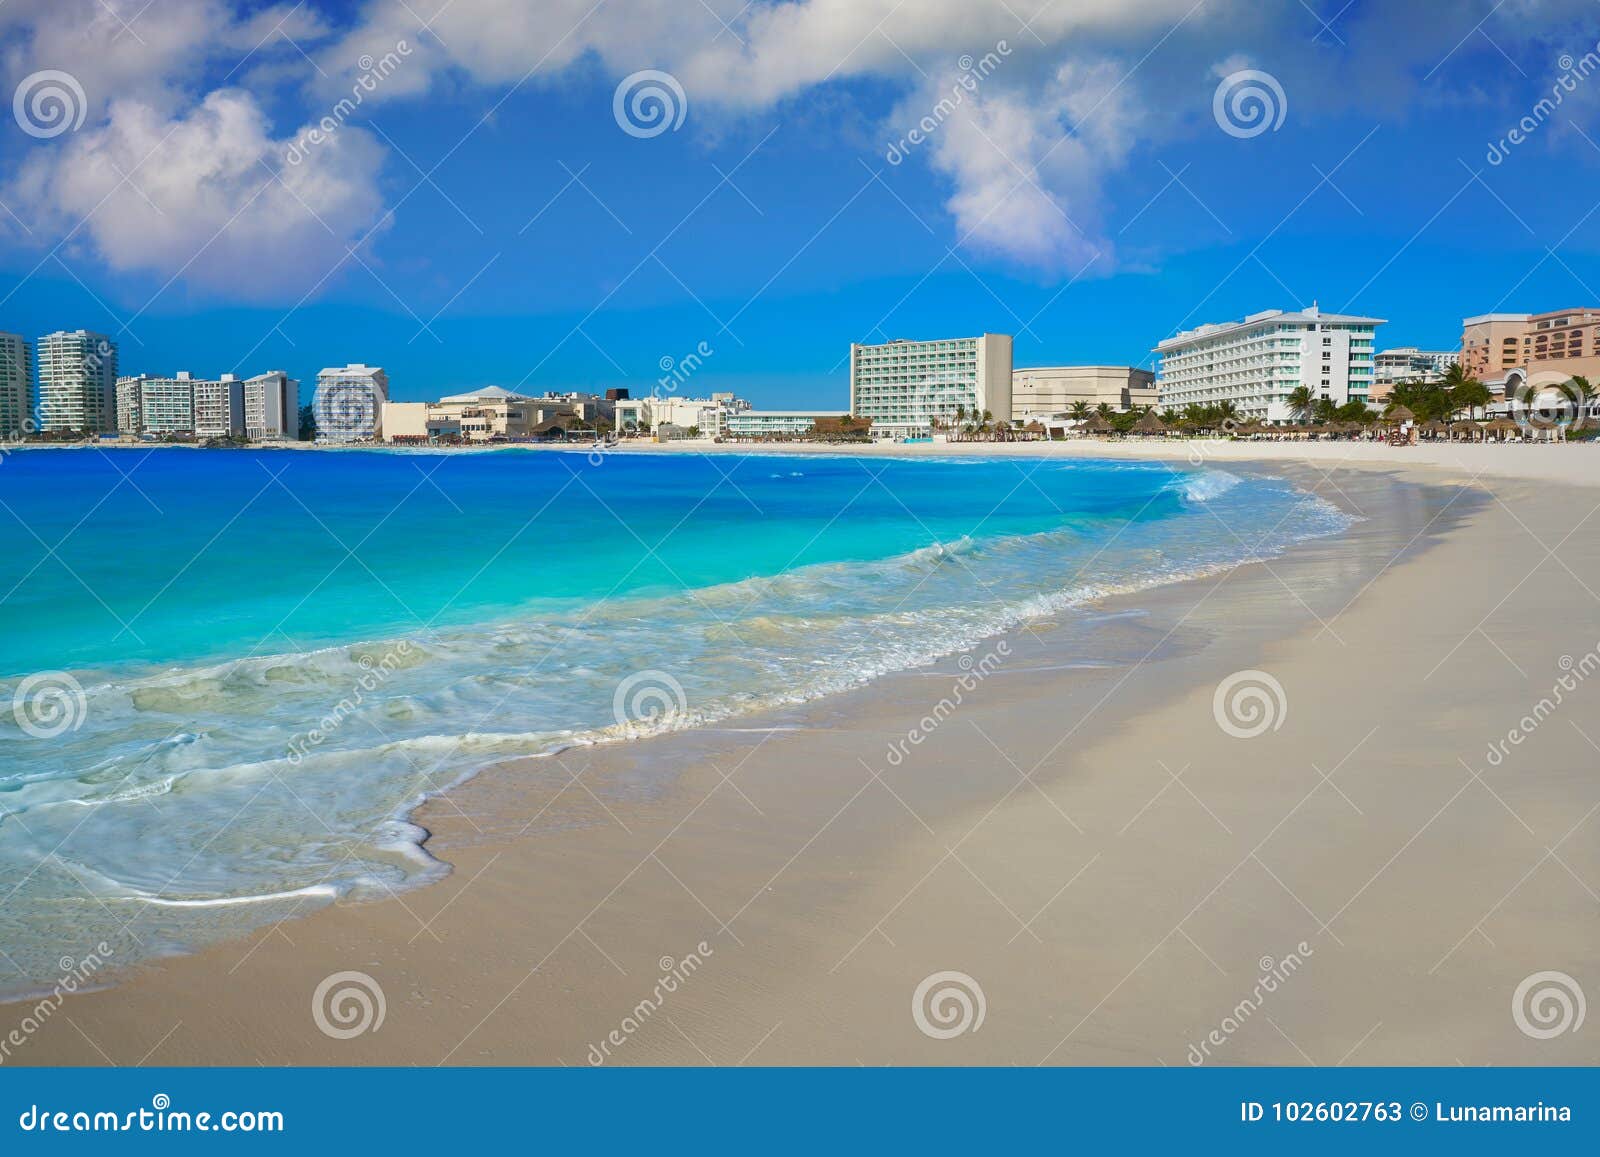 cancun forum beach playa gaviota azul